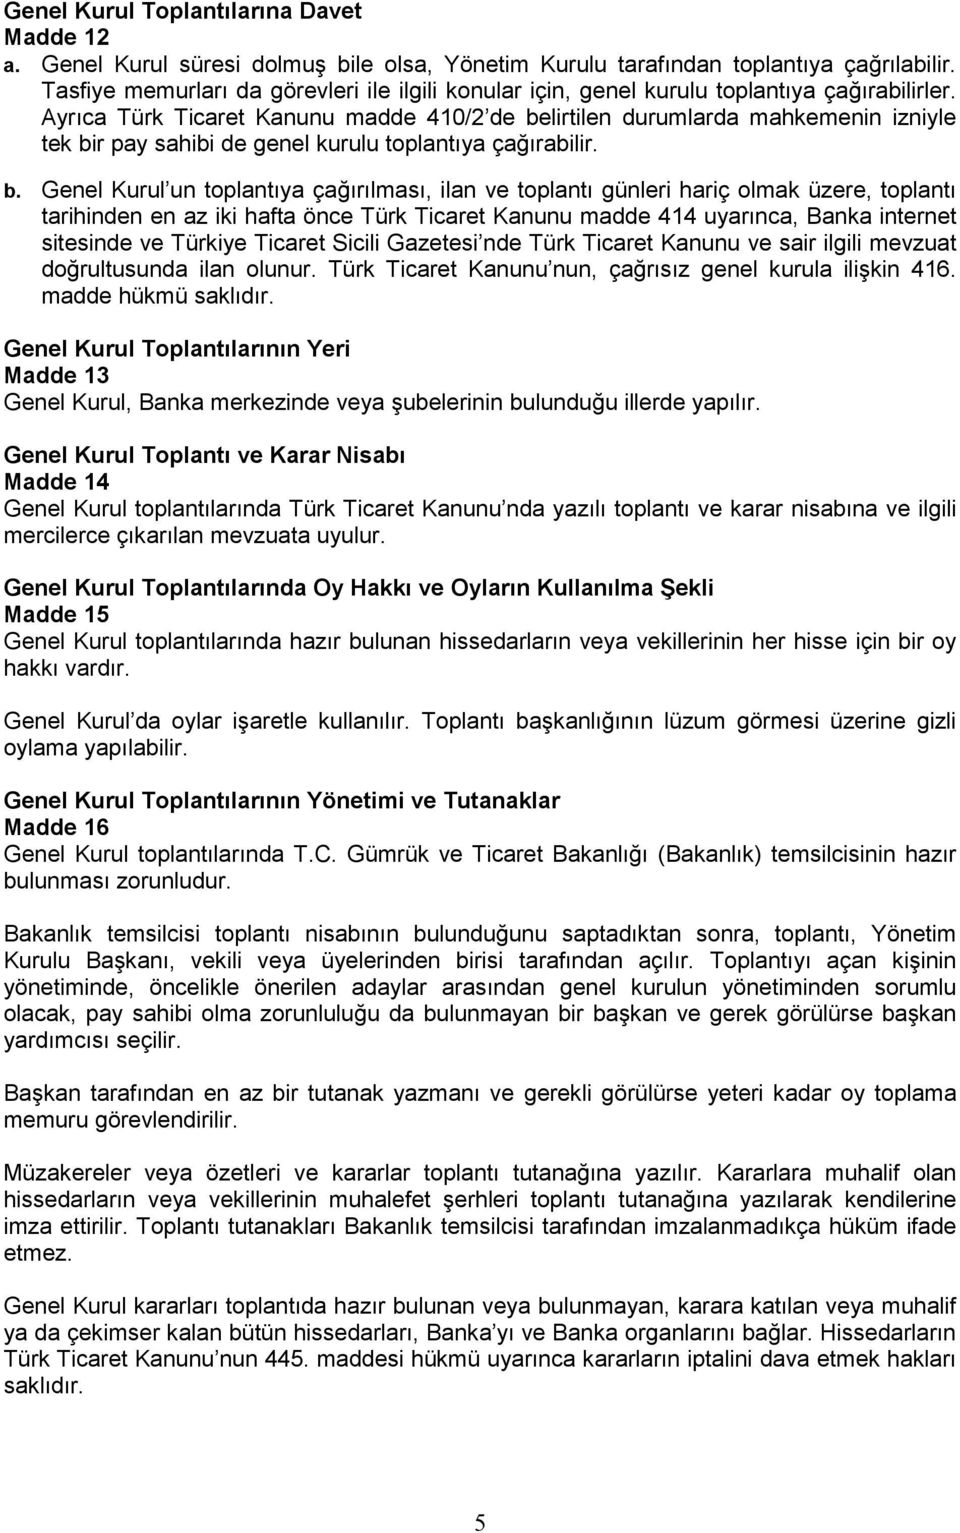 Ayrıca Türk Ticaret Kanunu madde 410/2 de be